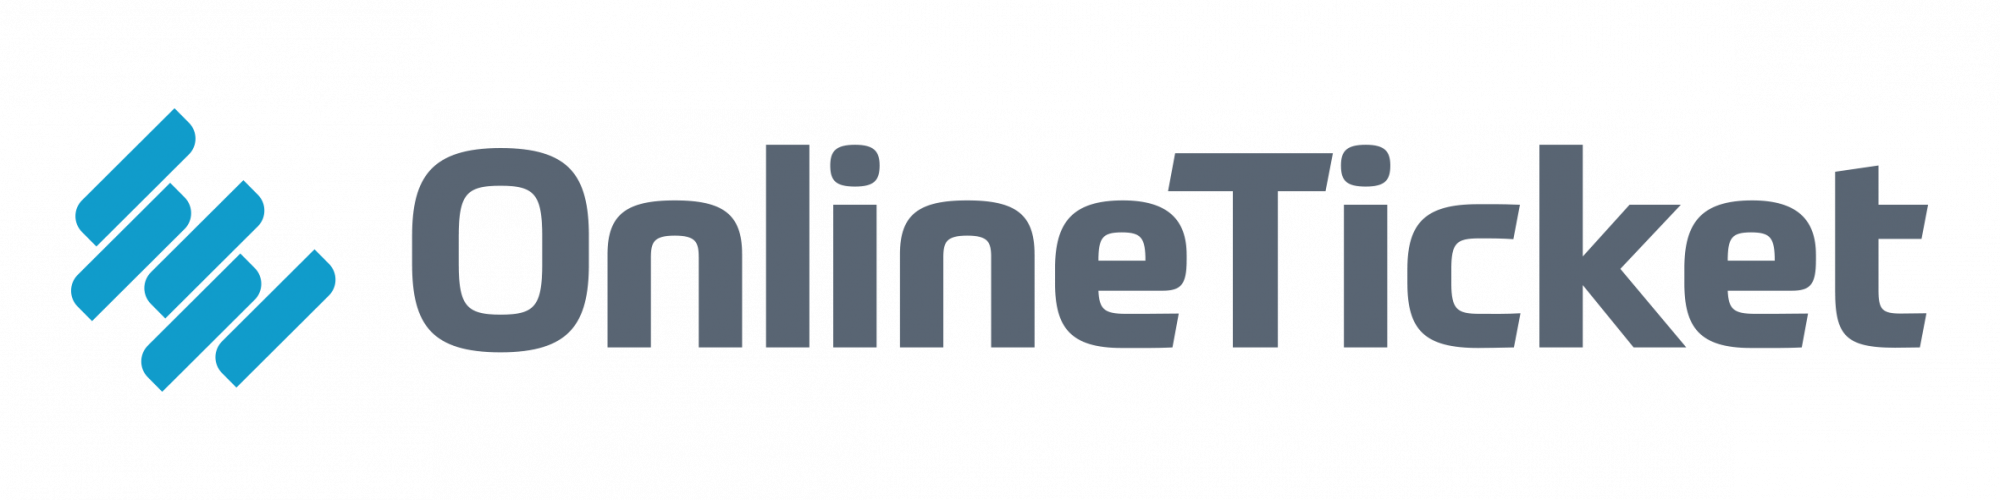 OnlineTicket logo